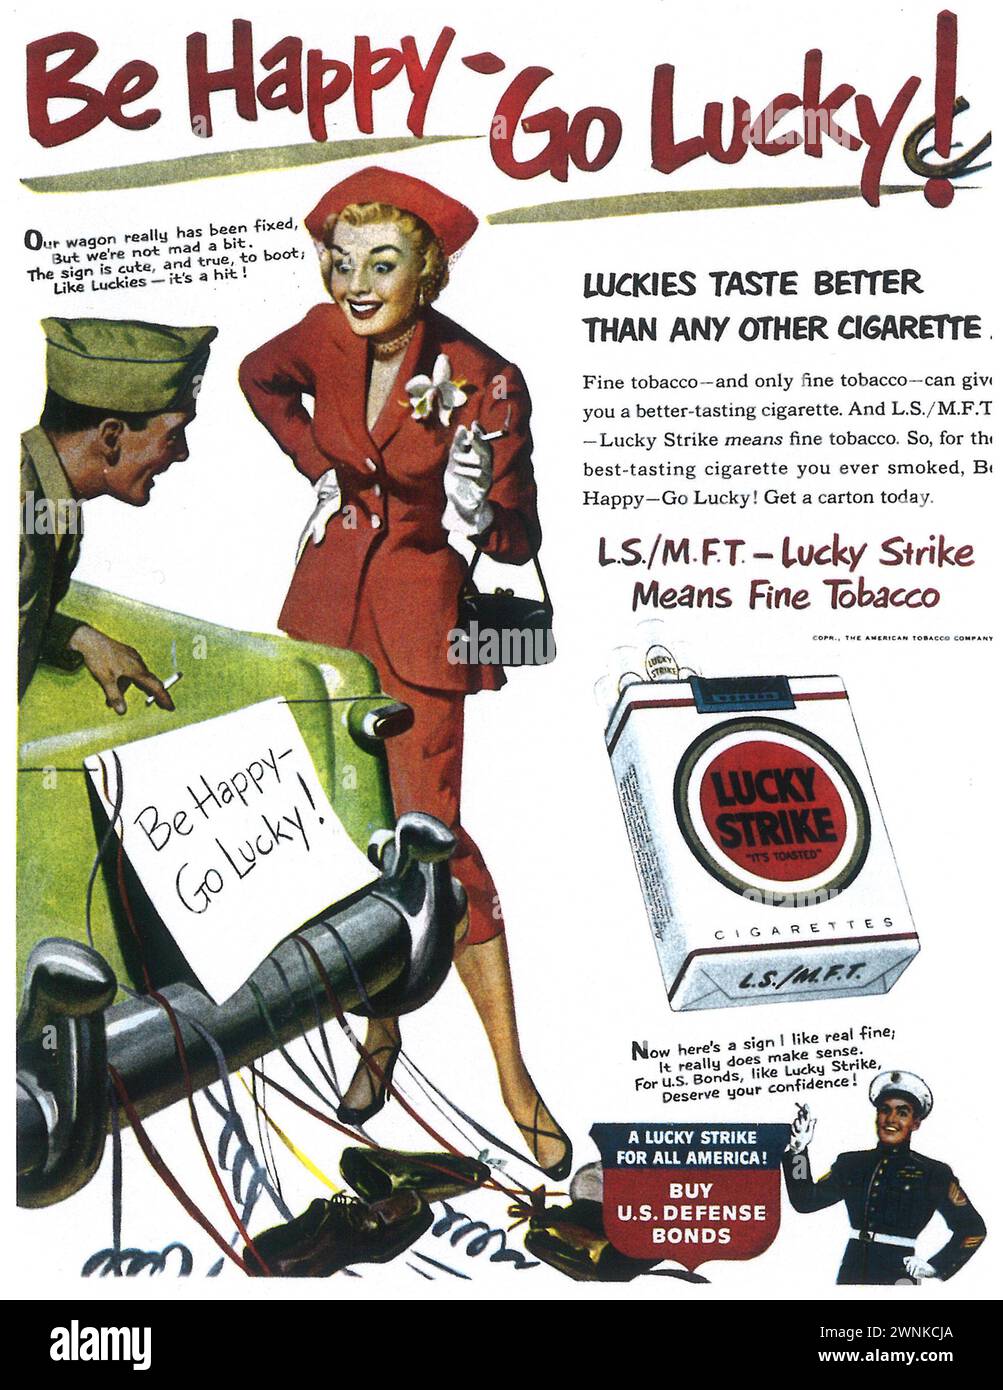 1951 Lucky Strike cigarettes ad. M.F.T. Means Fine Tobacco. 'Be happy - go lucky!'. 'Buy U.S. Defense bonds.' Stock Photo